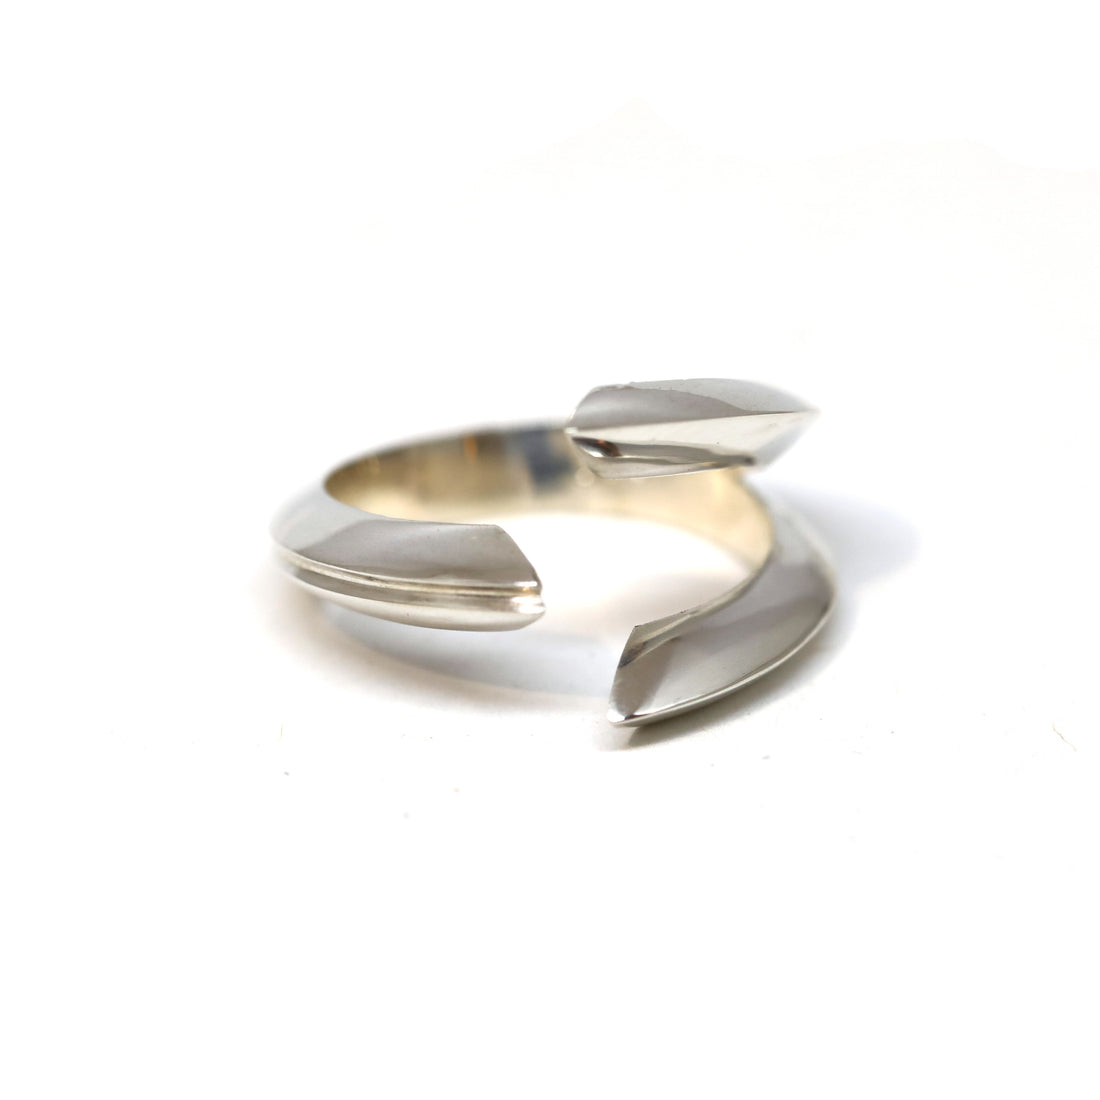 bena jewelry edgy ring silver jewelry minimalist ring unisex simple shapes unisexe fine jewelry bold jewelry design canada jewelry designer ruby mardi jewelry gallery montreal